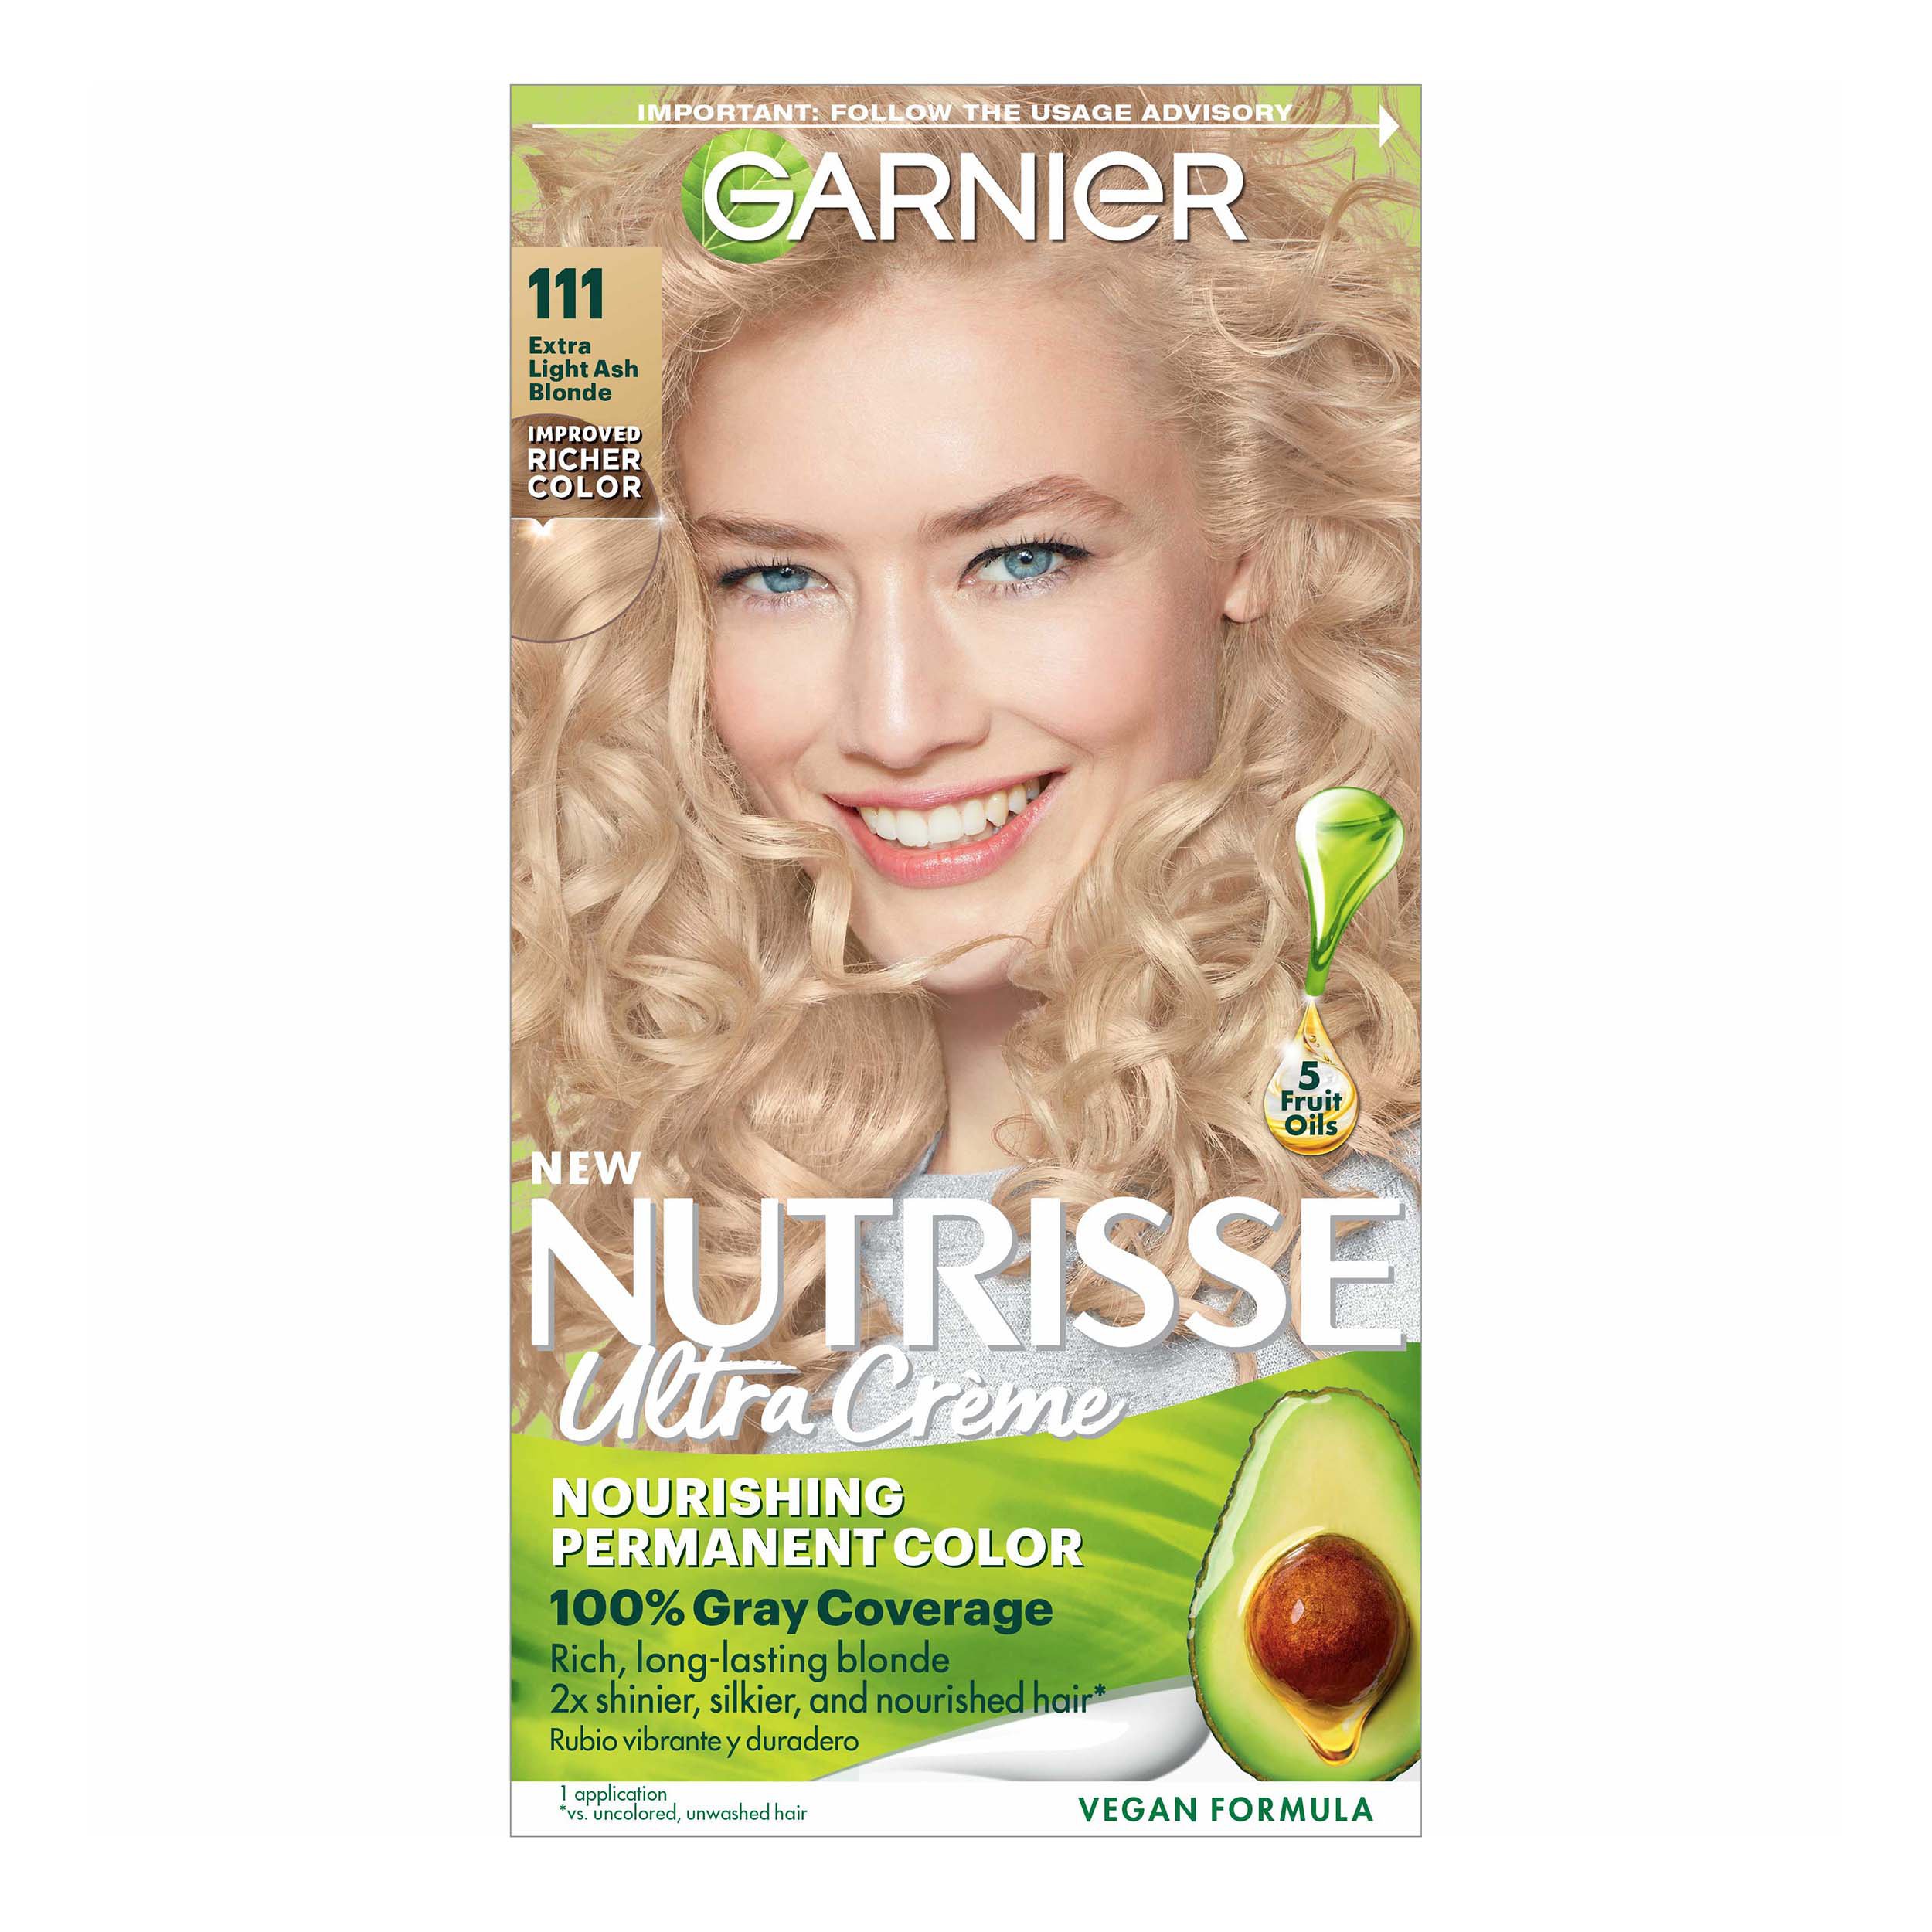 Garnier Nutrisse Nourishing Hair Color Creme - 111 Extra-Light Ash Blonde (White Chocolate) Shop Hair Care at H-E-B